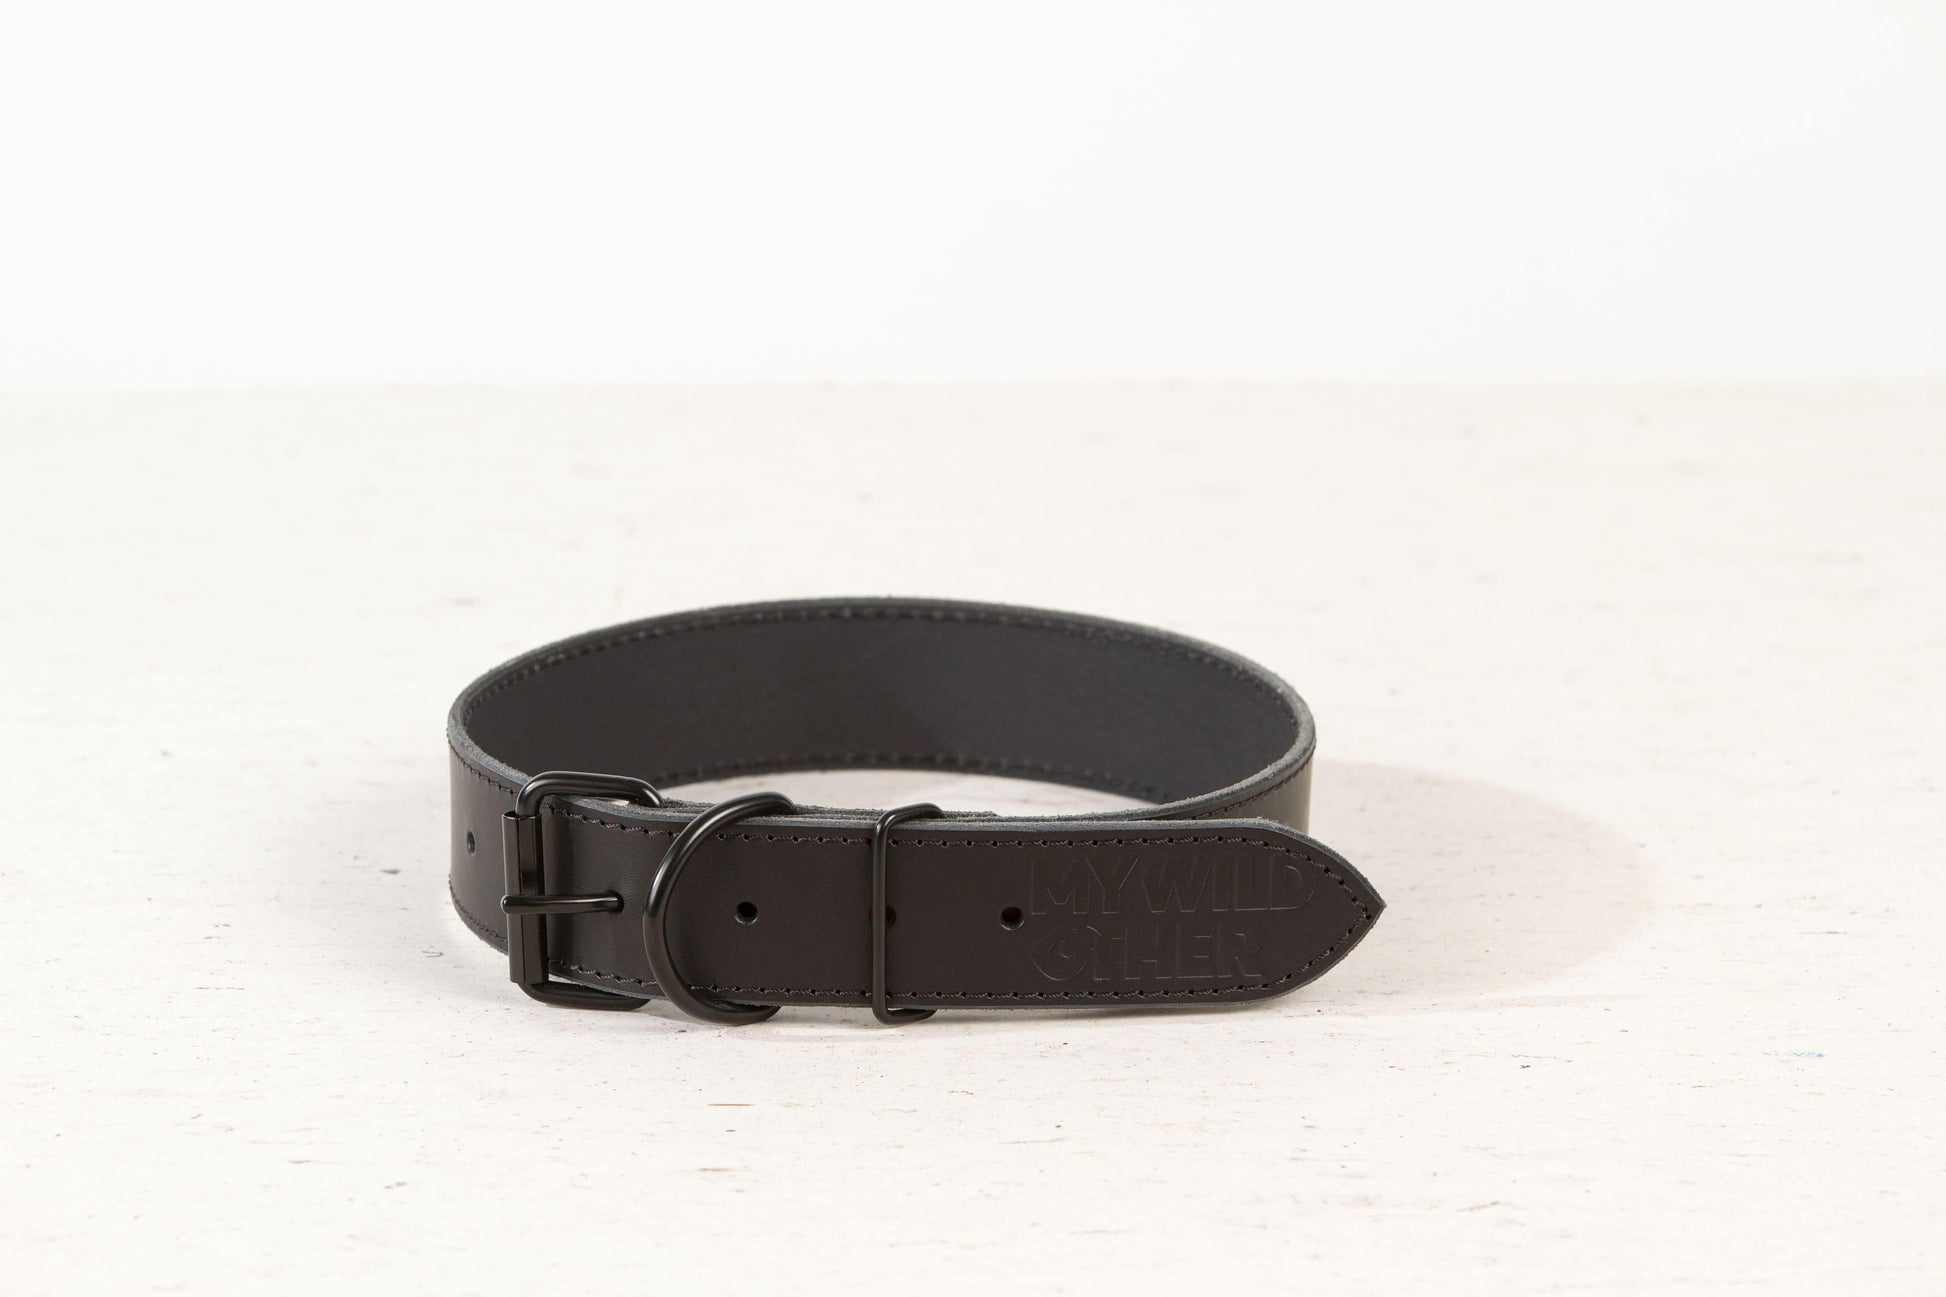 Handmade black leather dog collar - European handmade dog accessories by My Wild Other